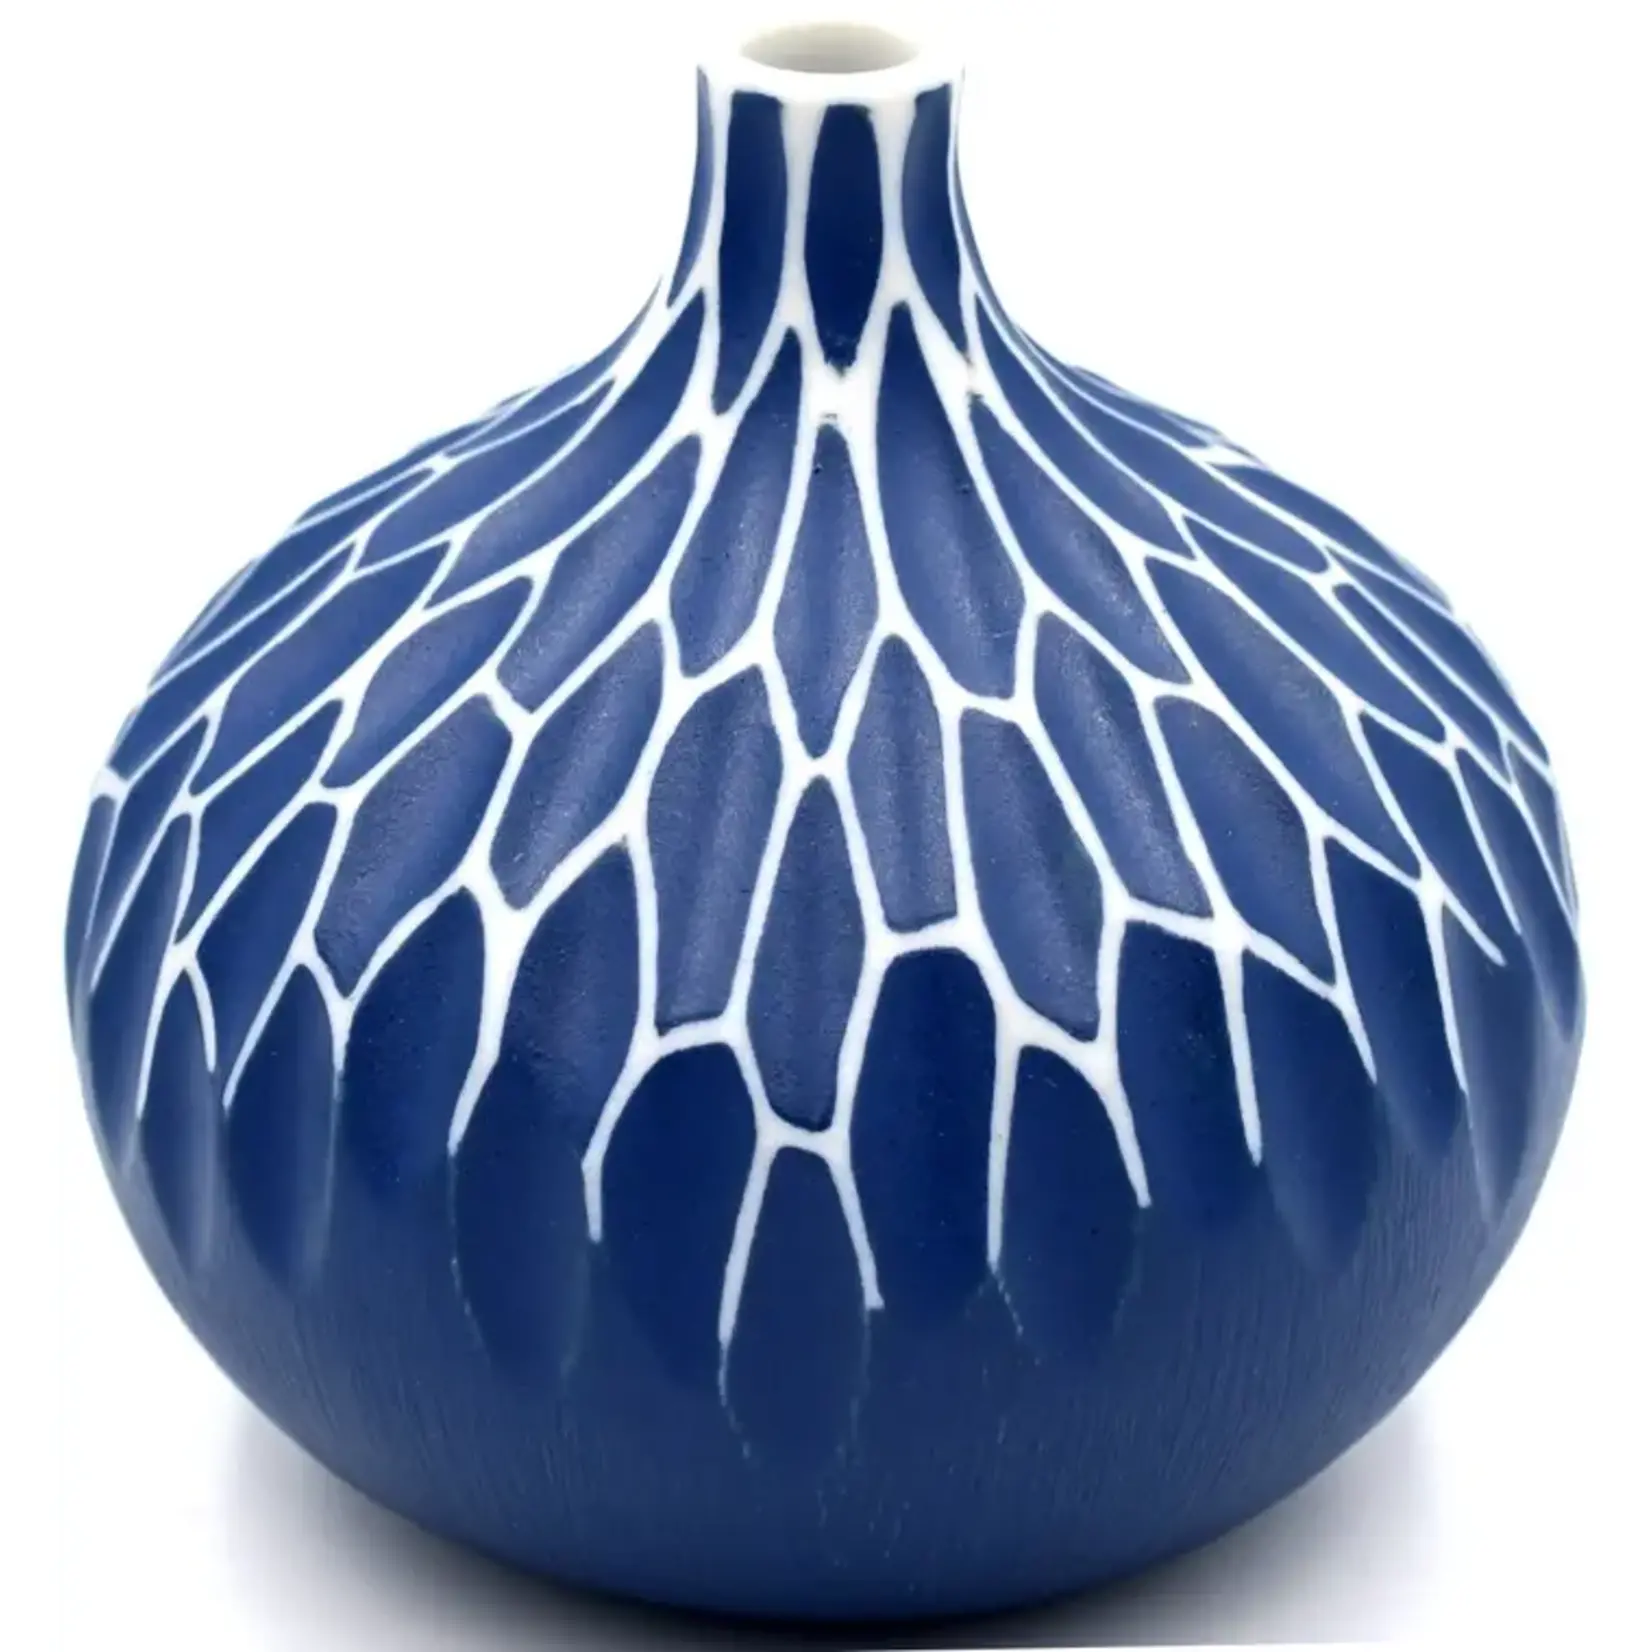 Congo Tiny Porcelain Bud Vase in WO69 Blue